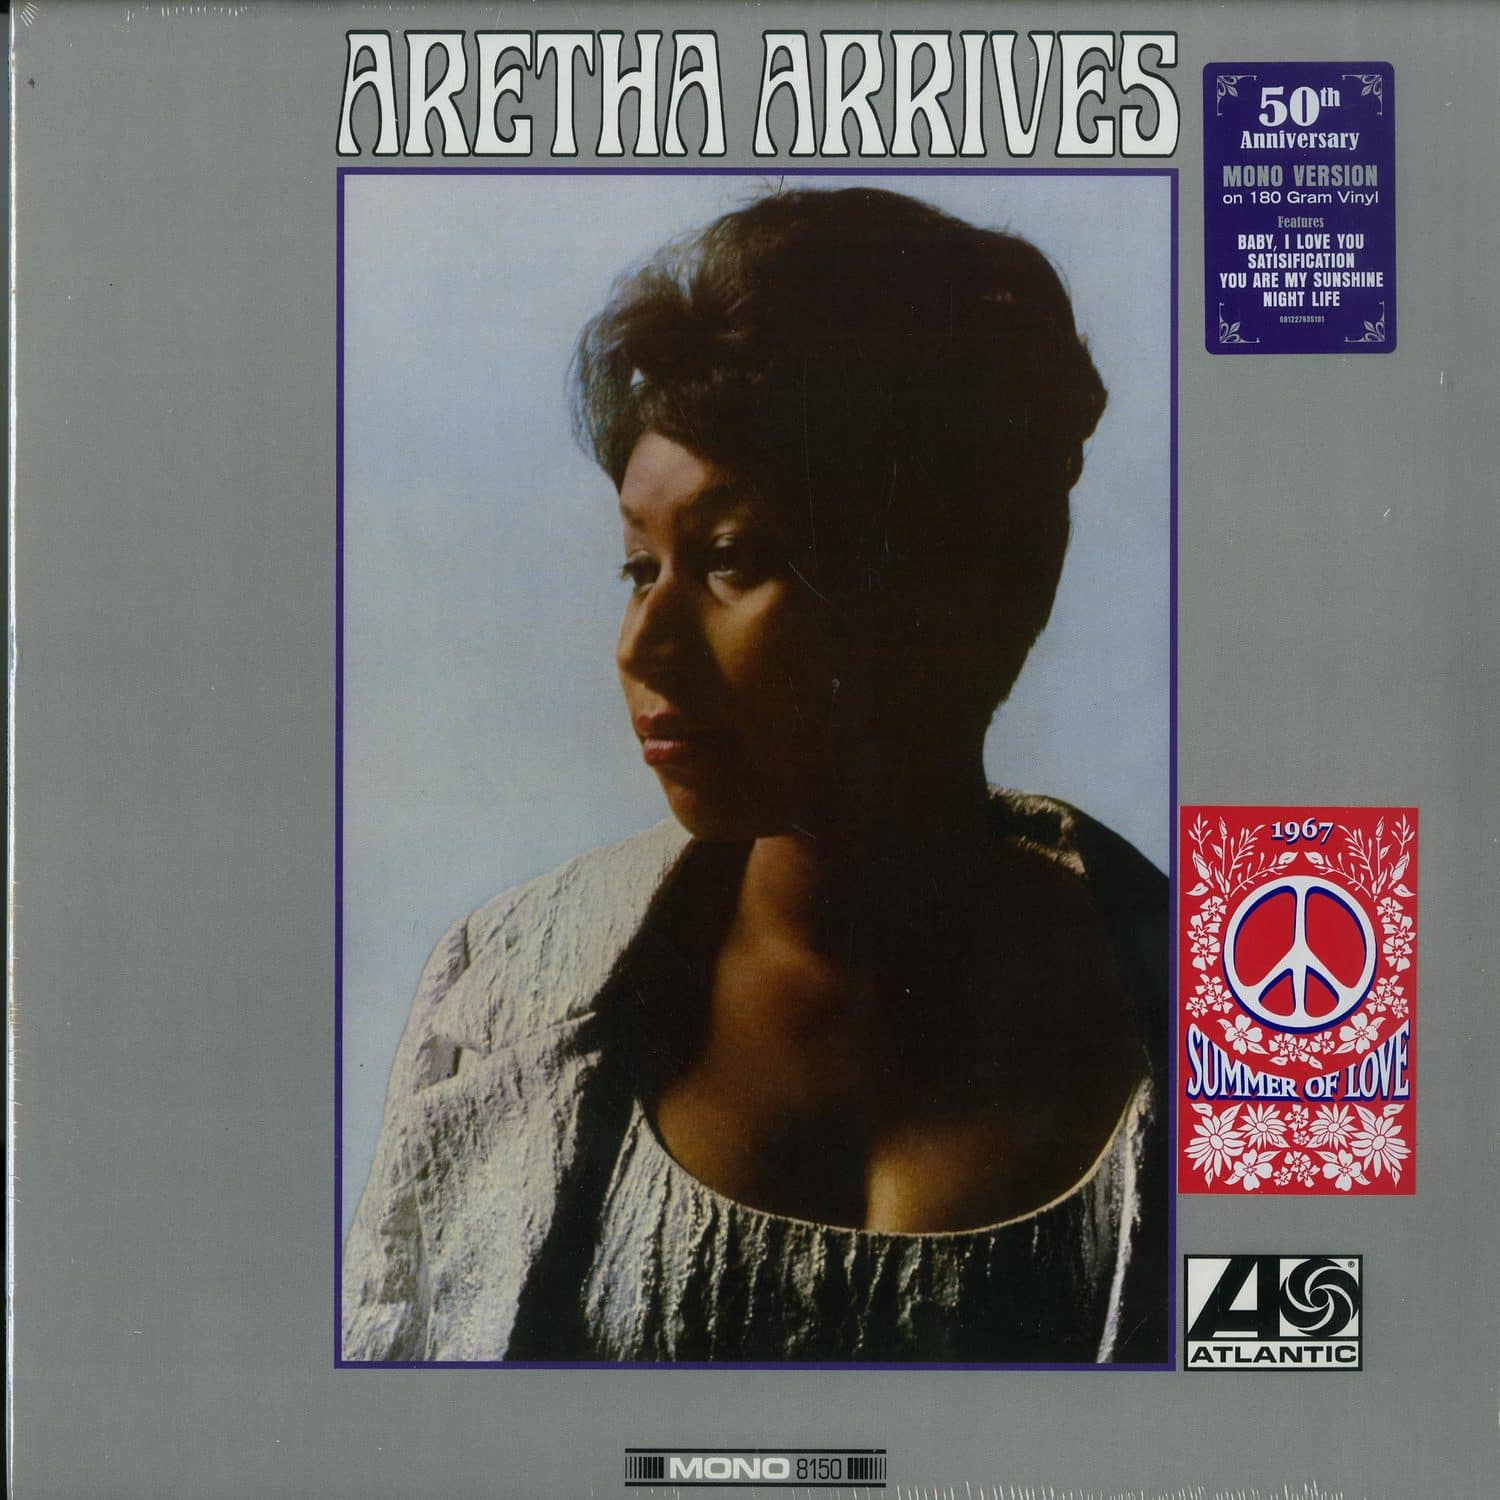 Aretha Franklin - ARETHA ARRIVES: 50TH ANNIVERSARY 